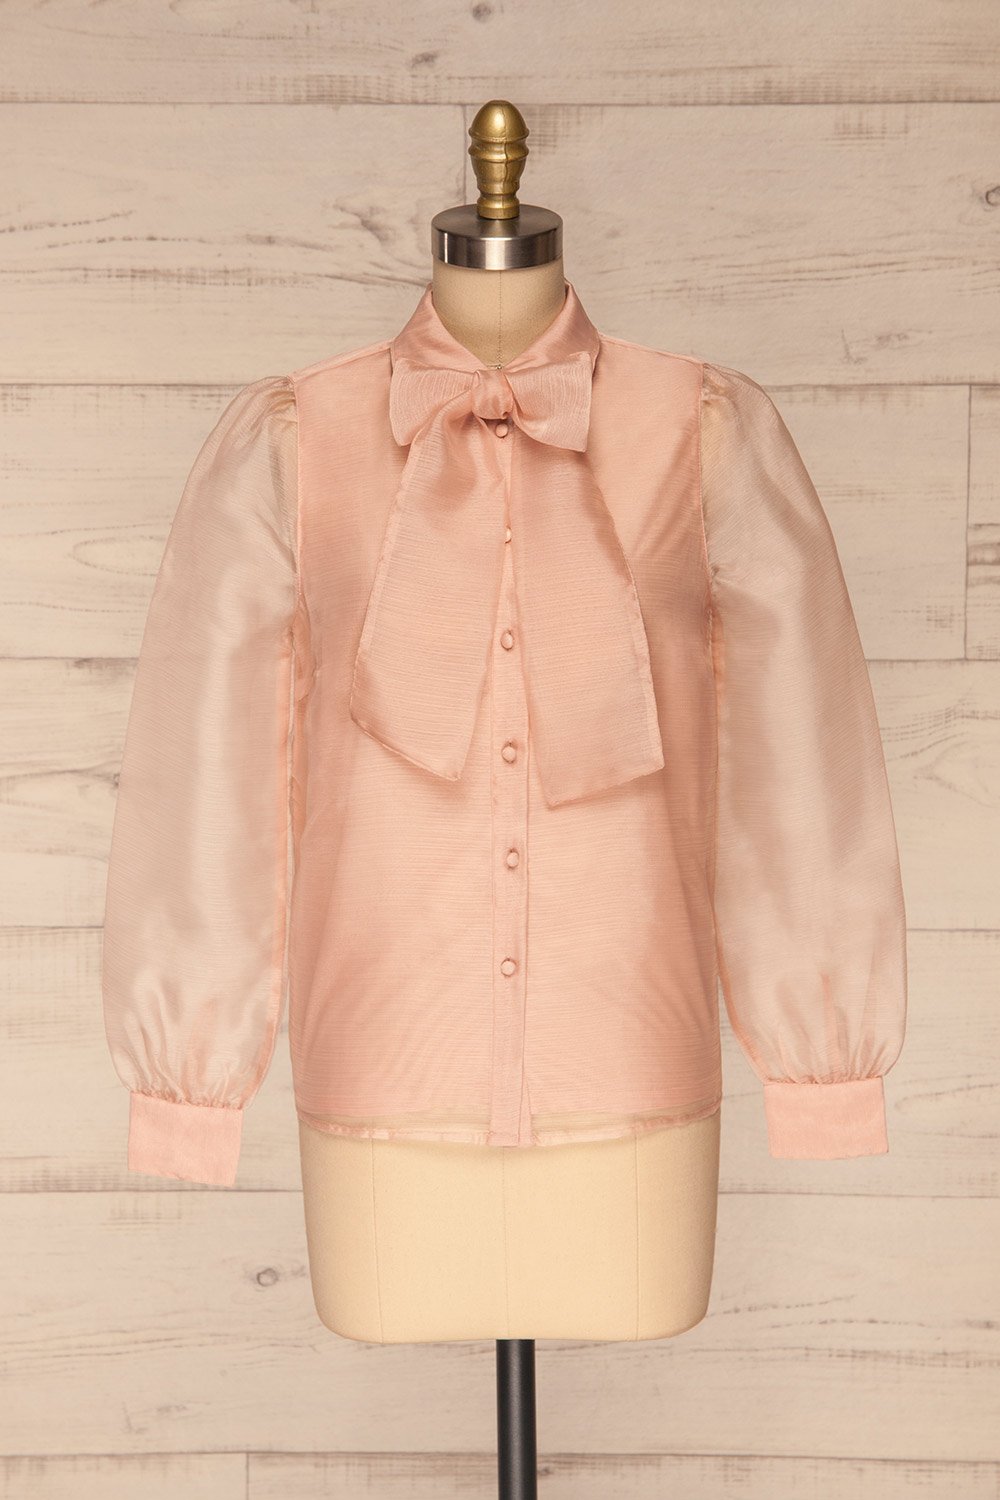 Xandra Rose Pink Tulle Shirt w/ Bow front view bow | La petite garçonne